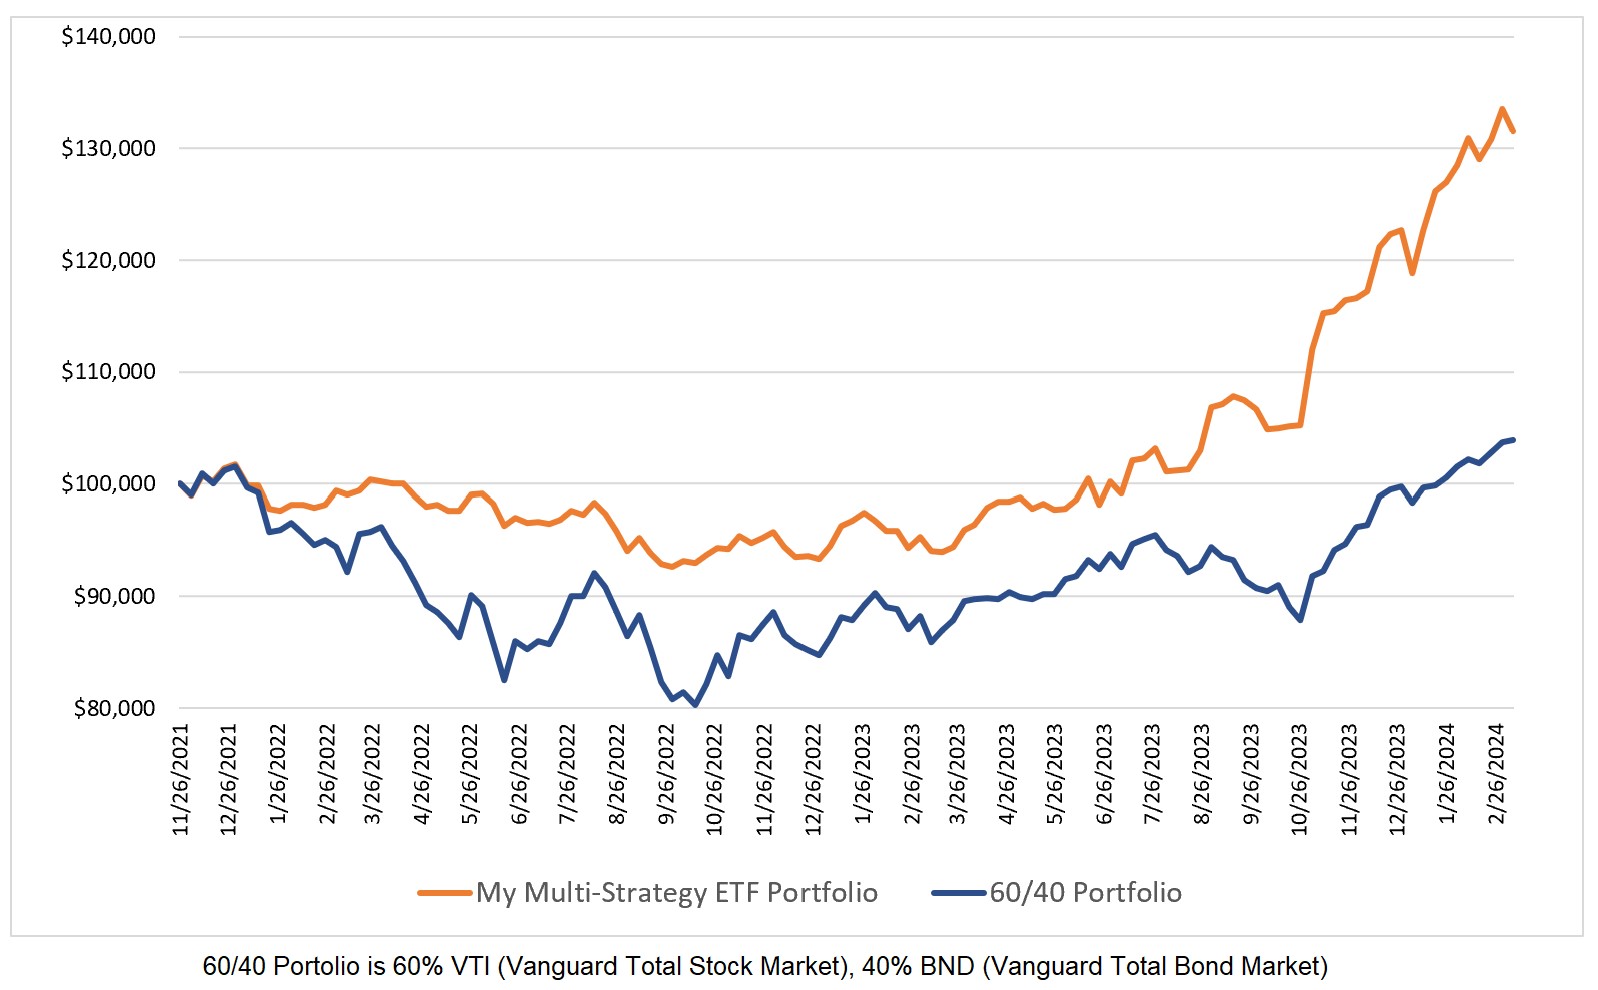 My Global ETF Multi-Strategy Portfolio vs 60 40